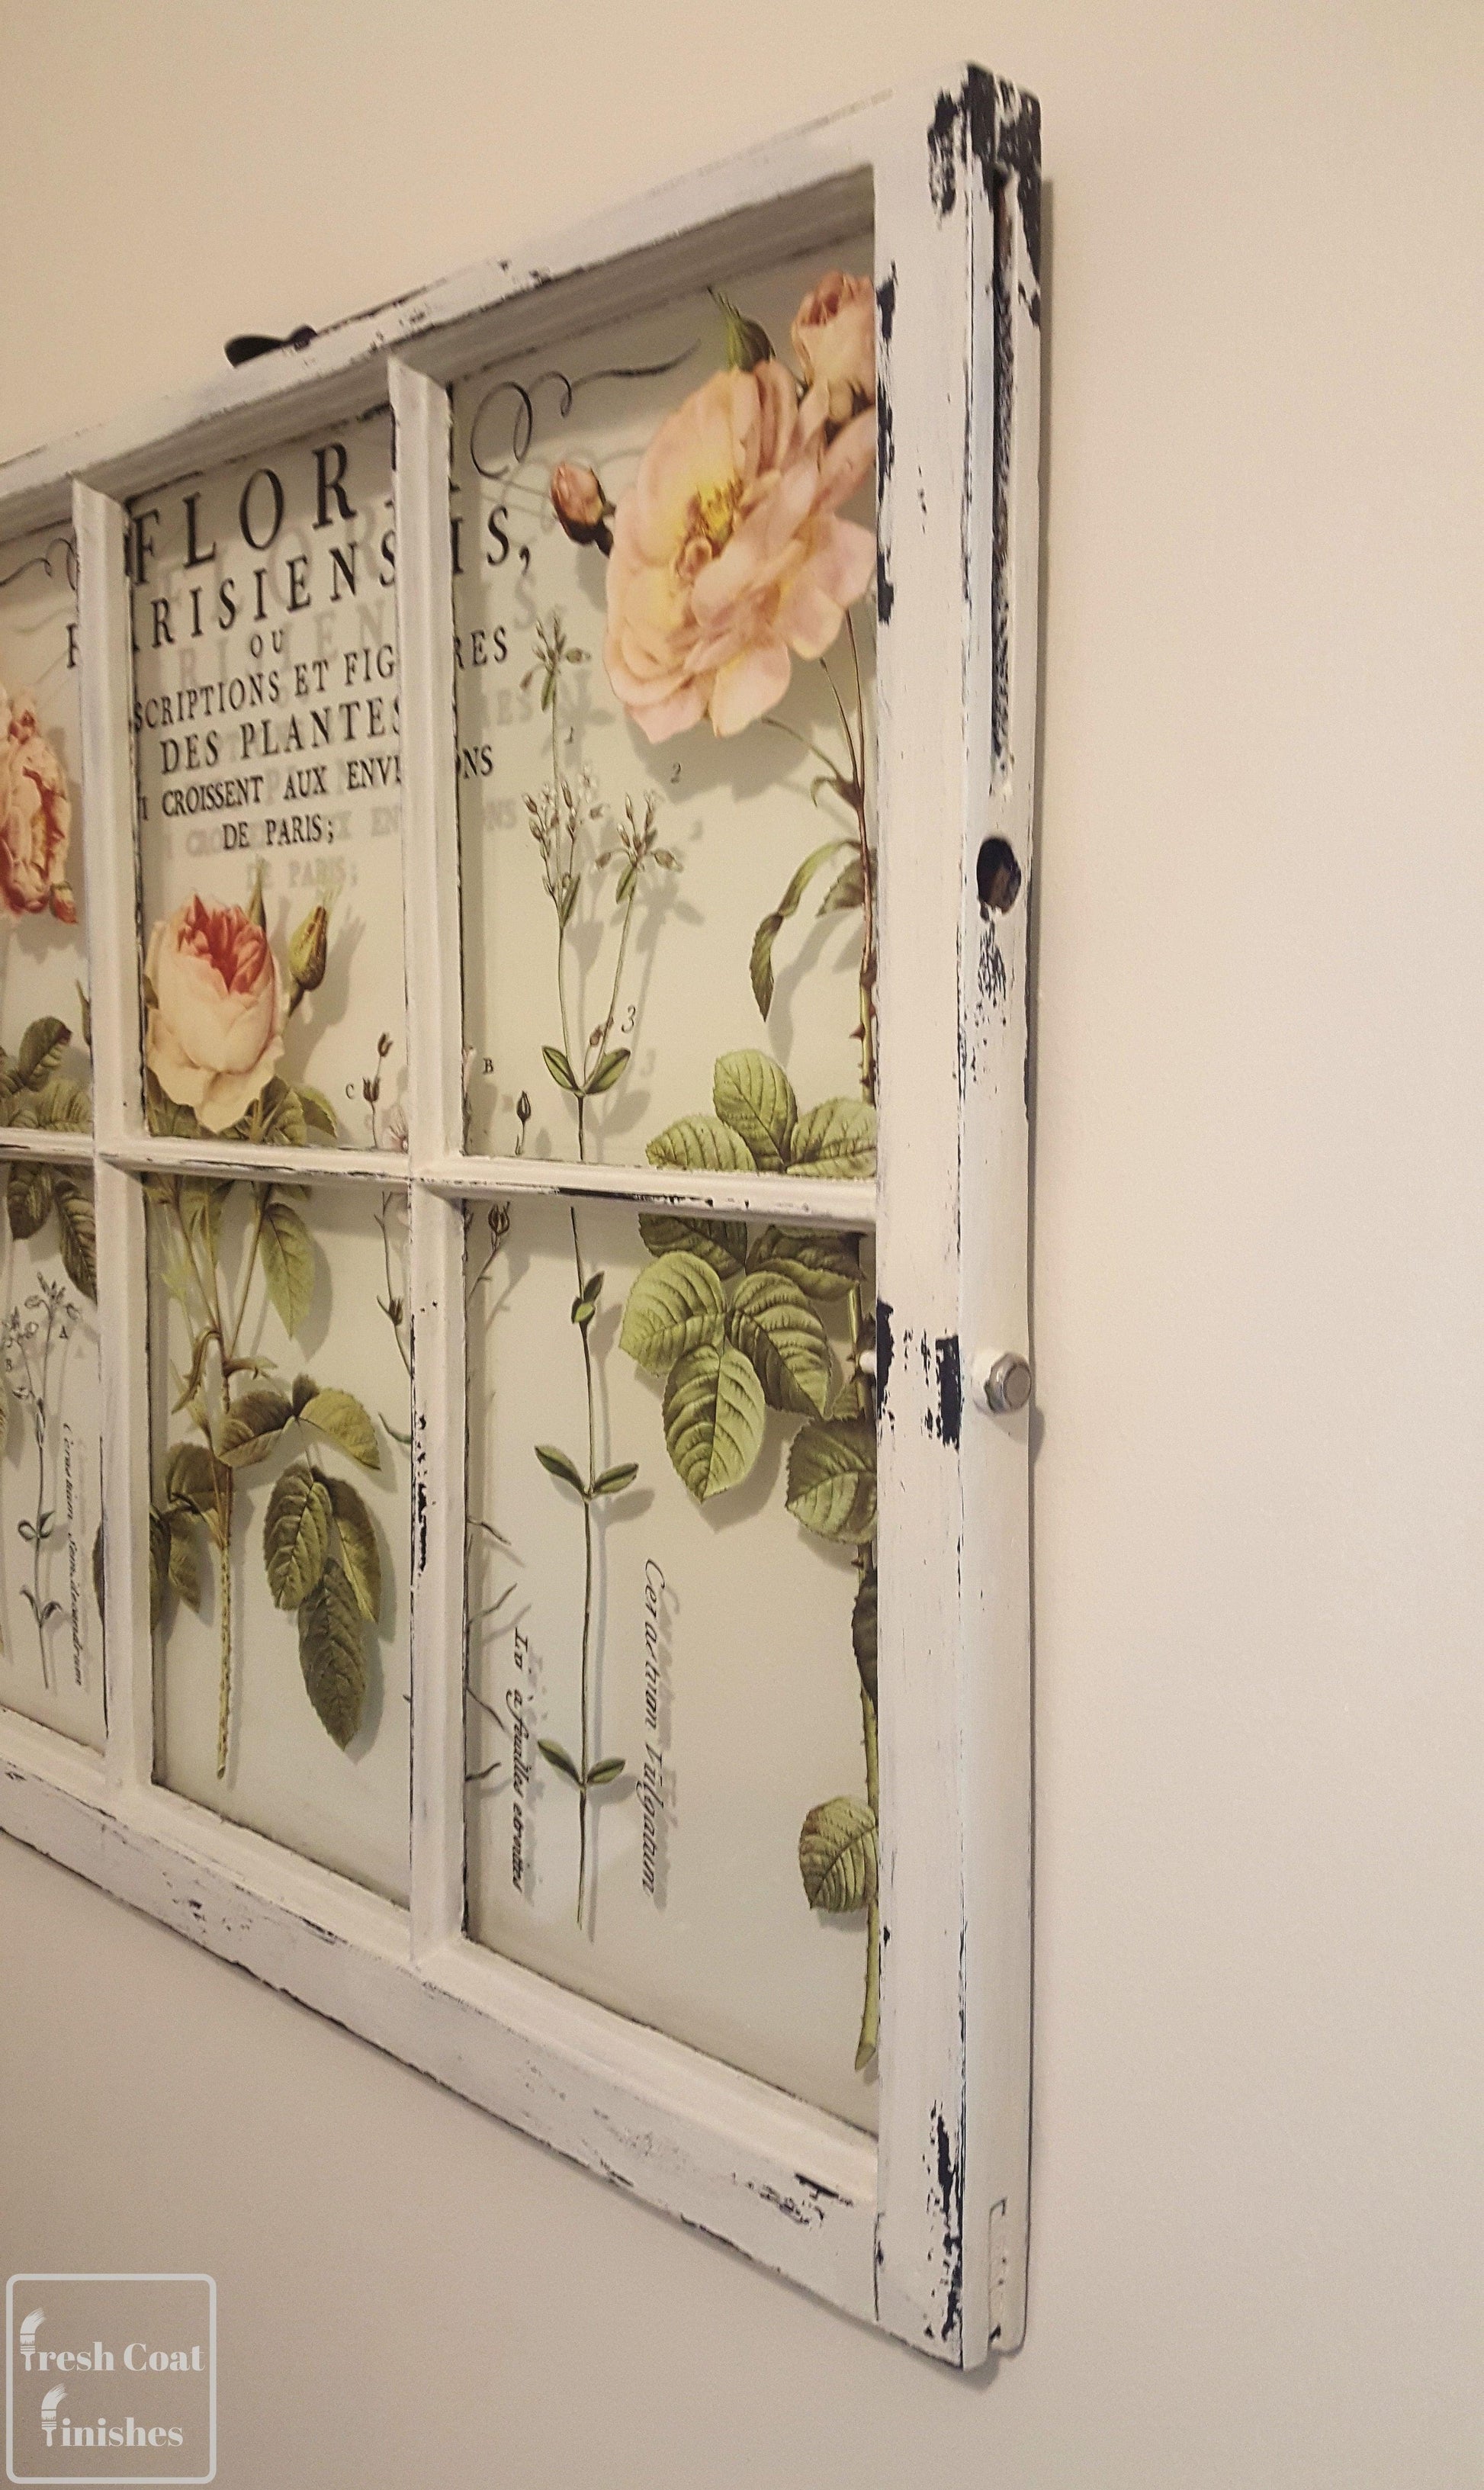 Vintage Window Wall Decor with Roses - Fresh Coat Finishes